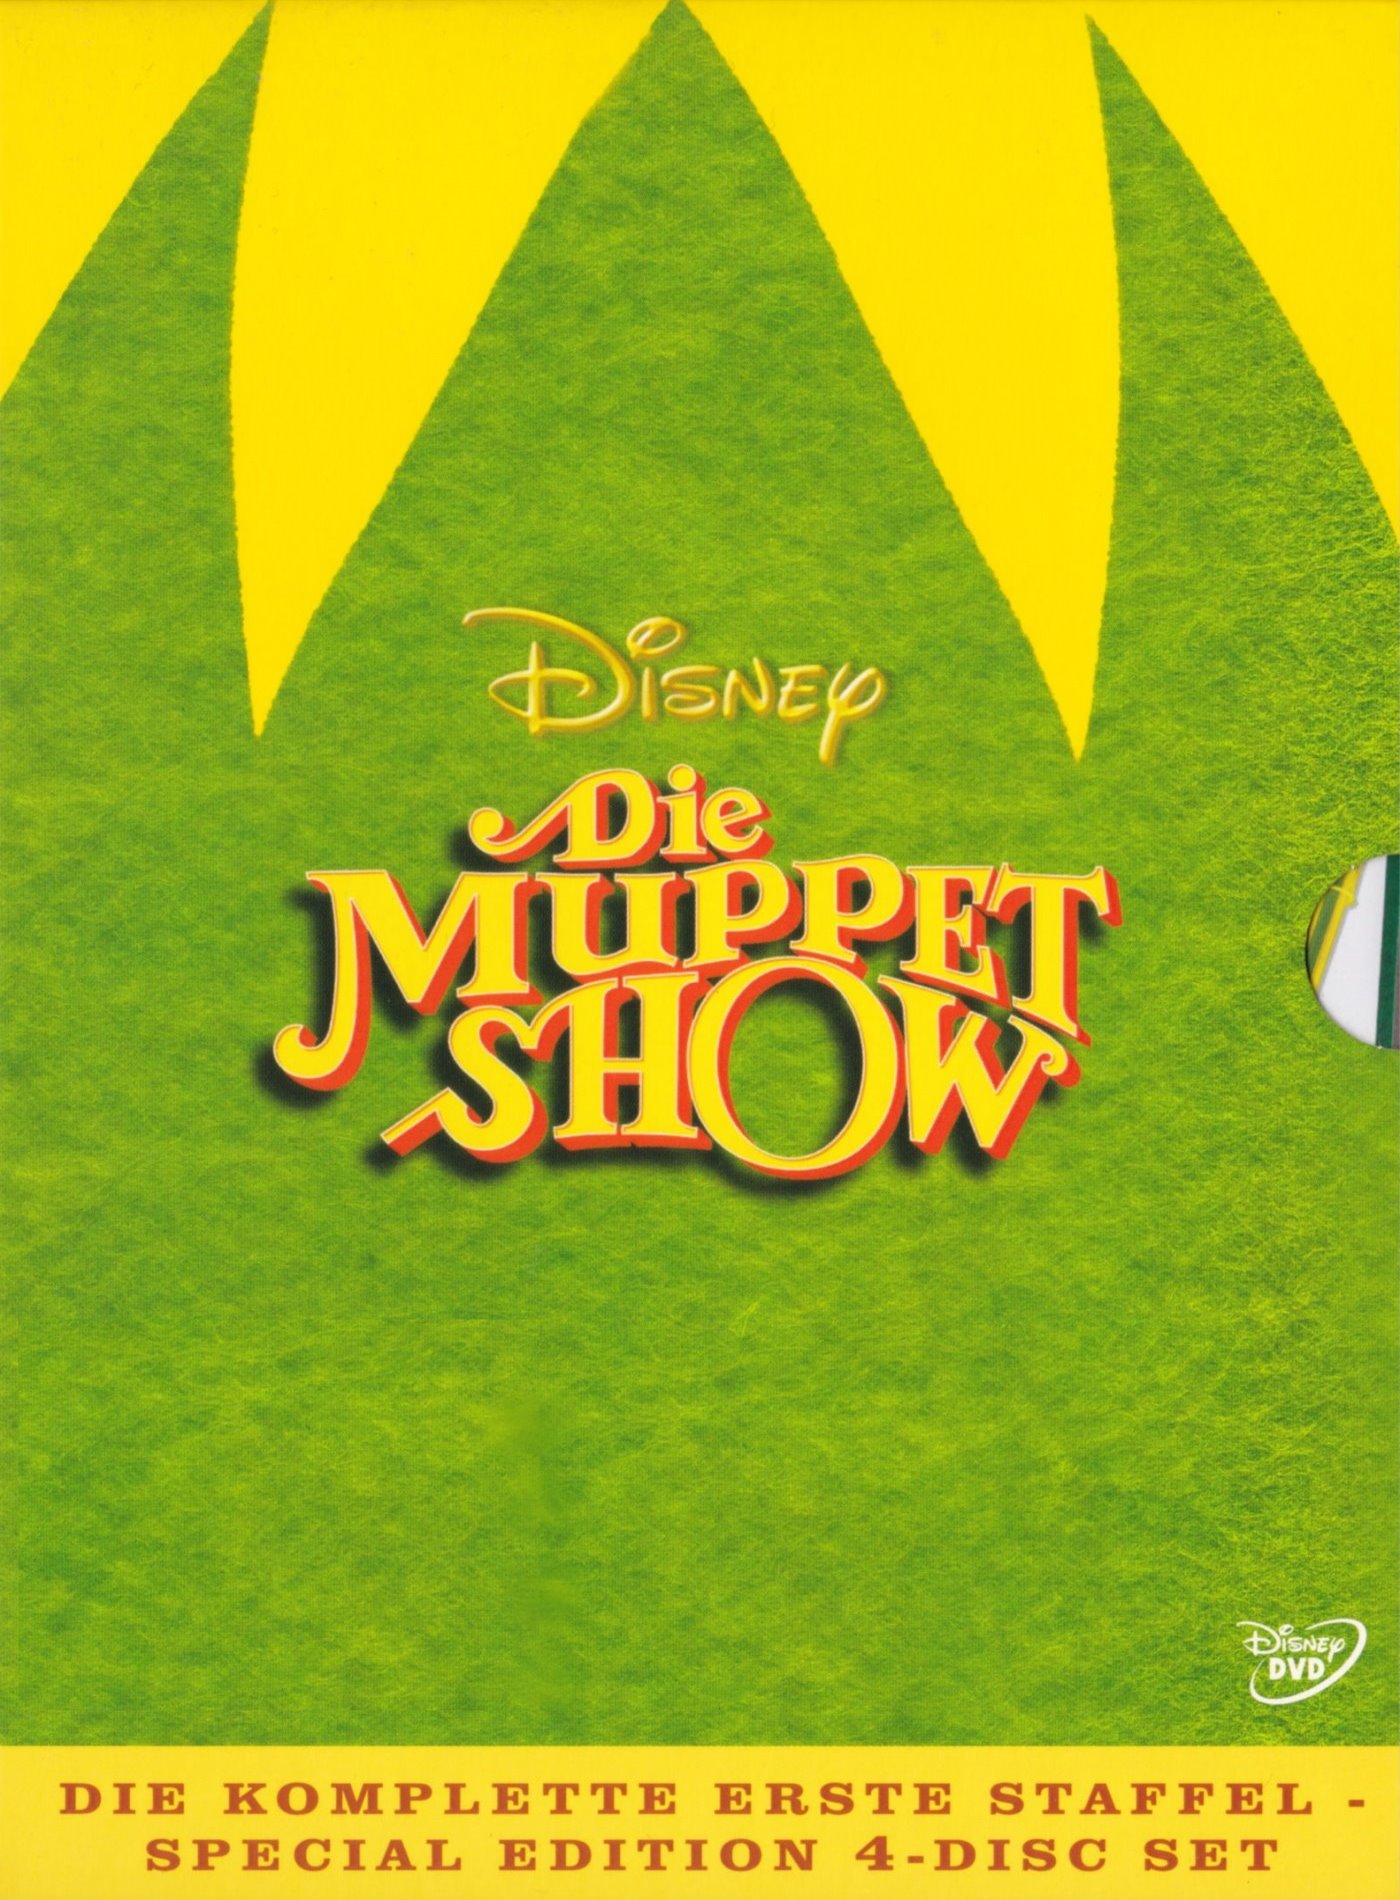 Cover - Die Muppet Show.jpg